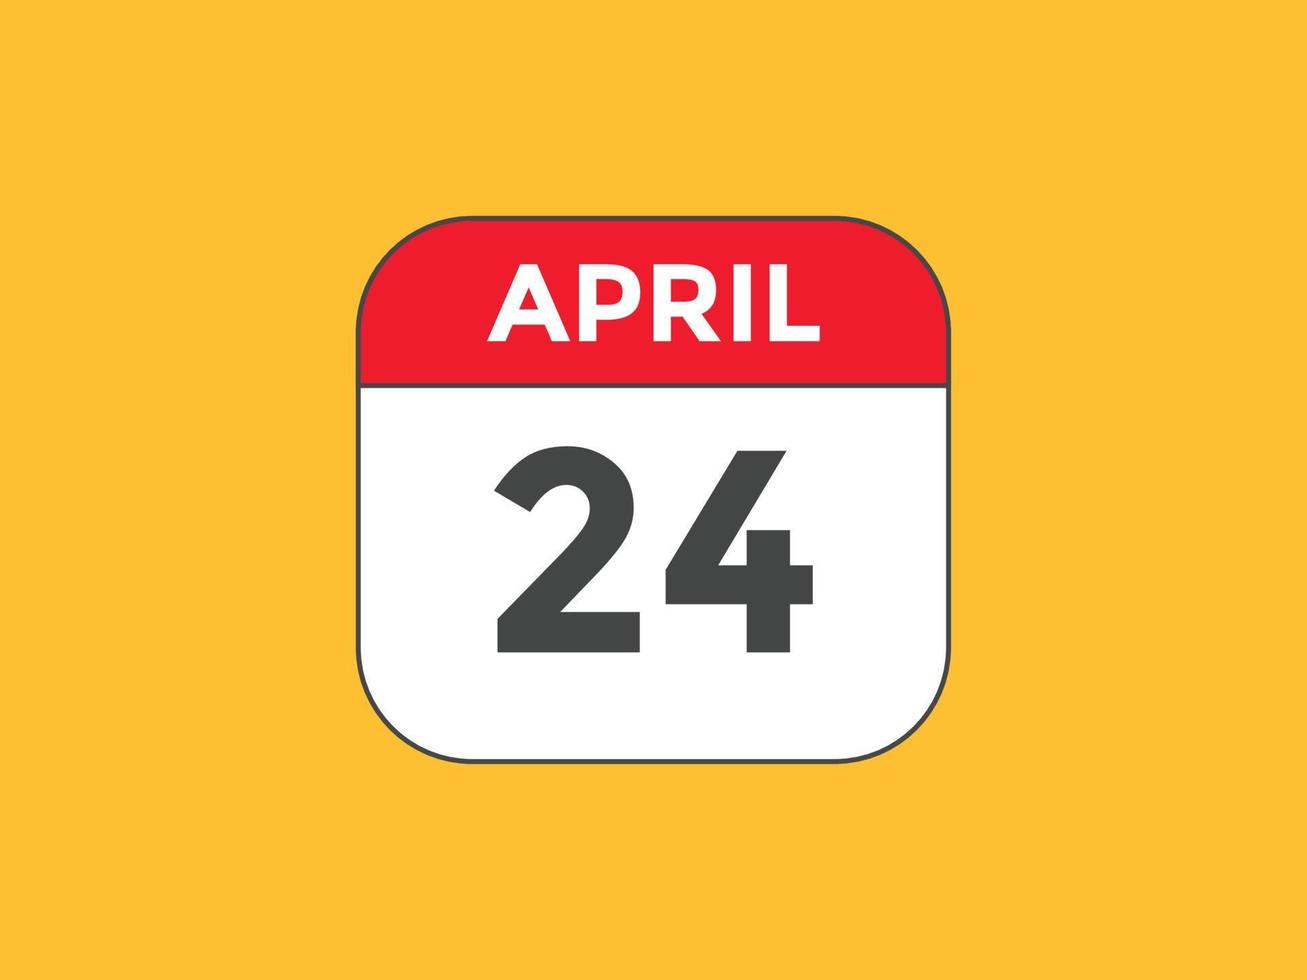 april 24 calendar reminder. 24th april daily calendar icon template. Calendar 24th april icon Design template. Vector illustration